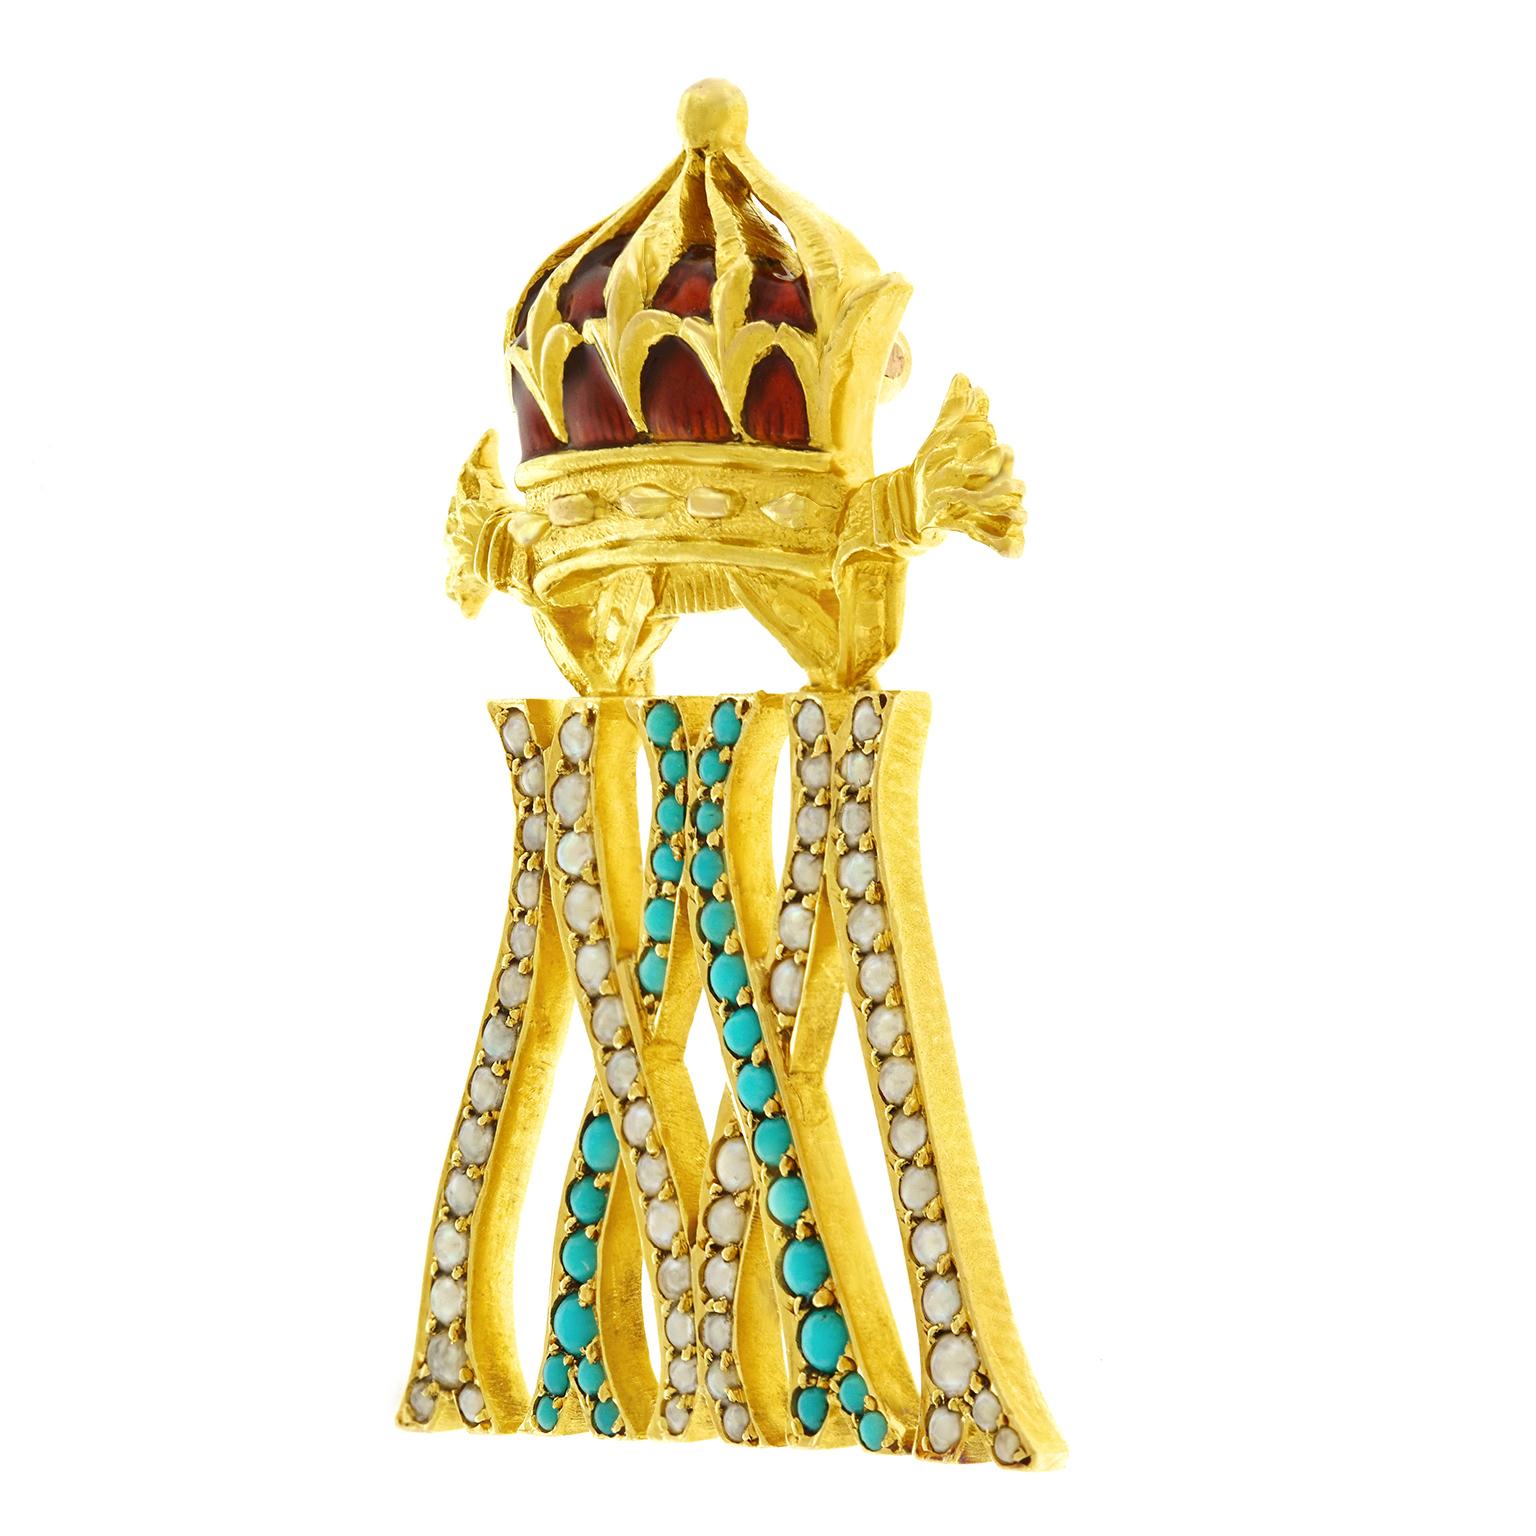 Women's or Men's Antique Gold Crown Brooch